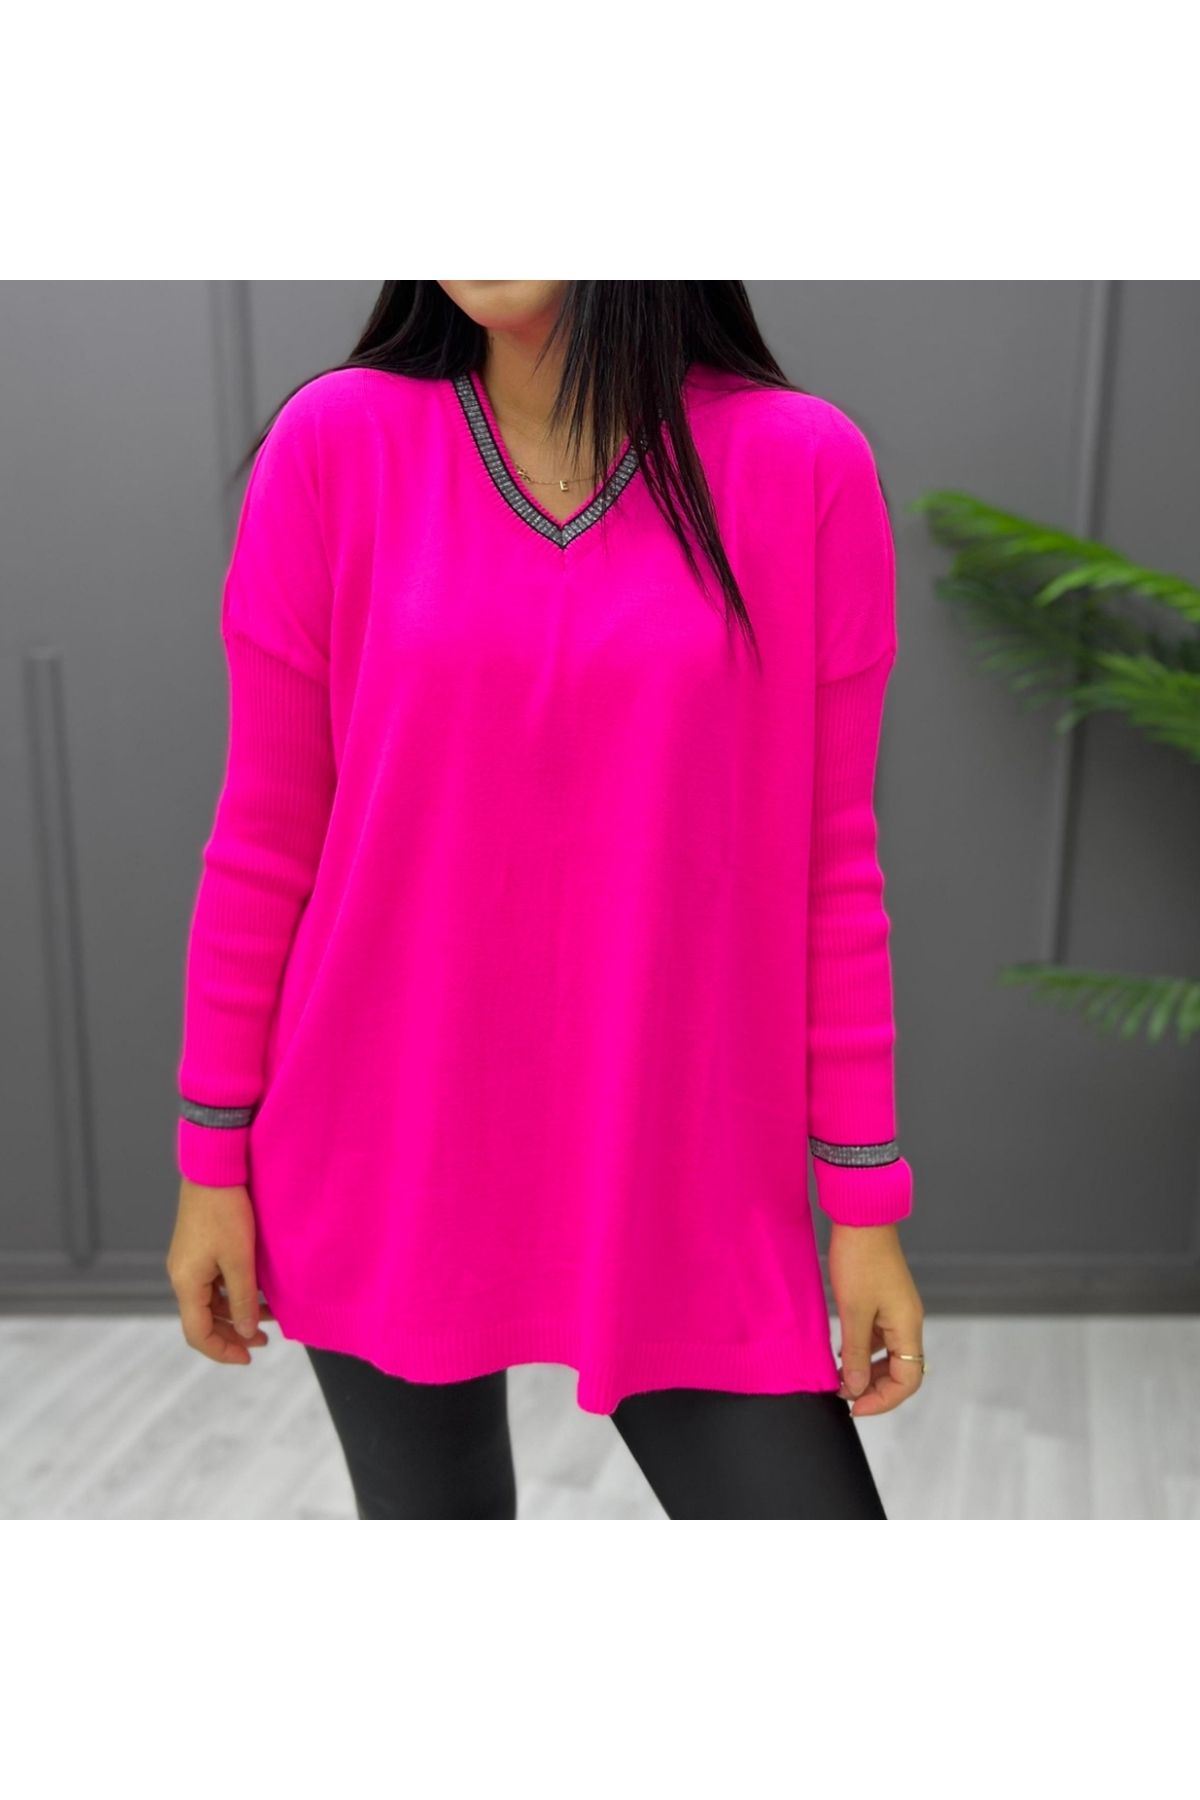 Hot Pink Vneck Sweater Top